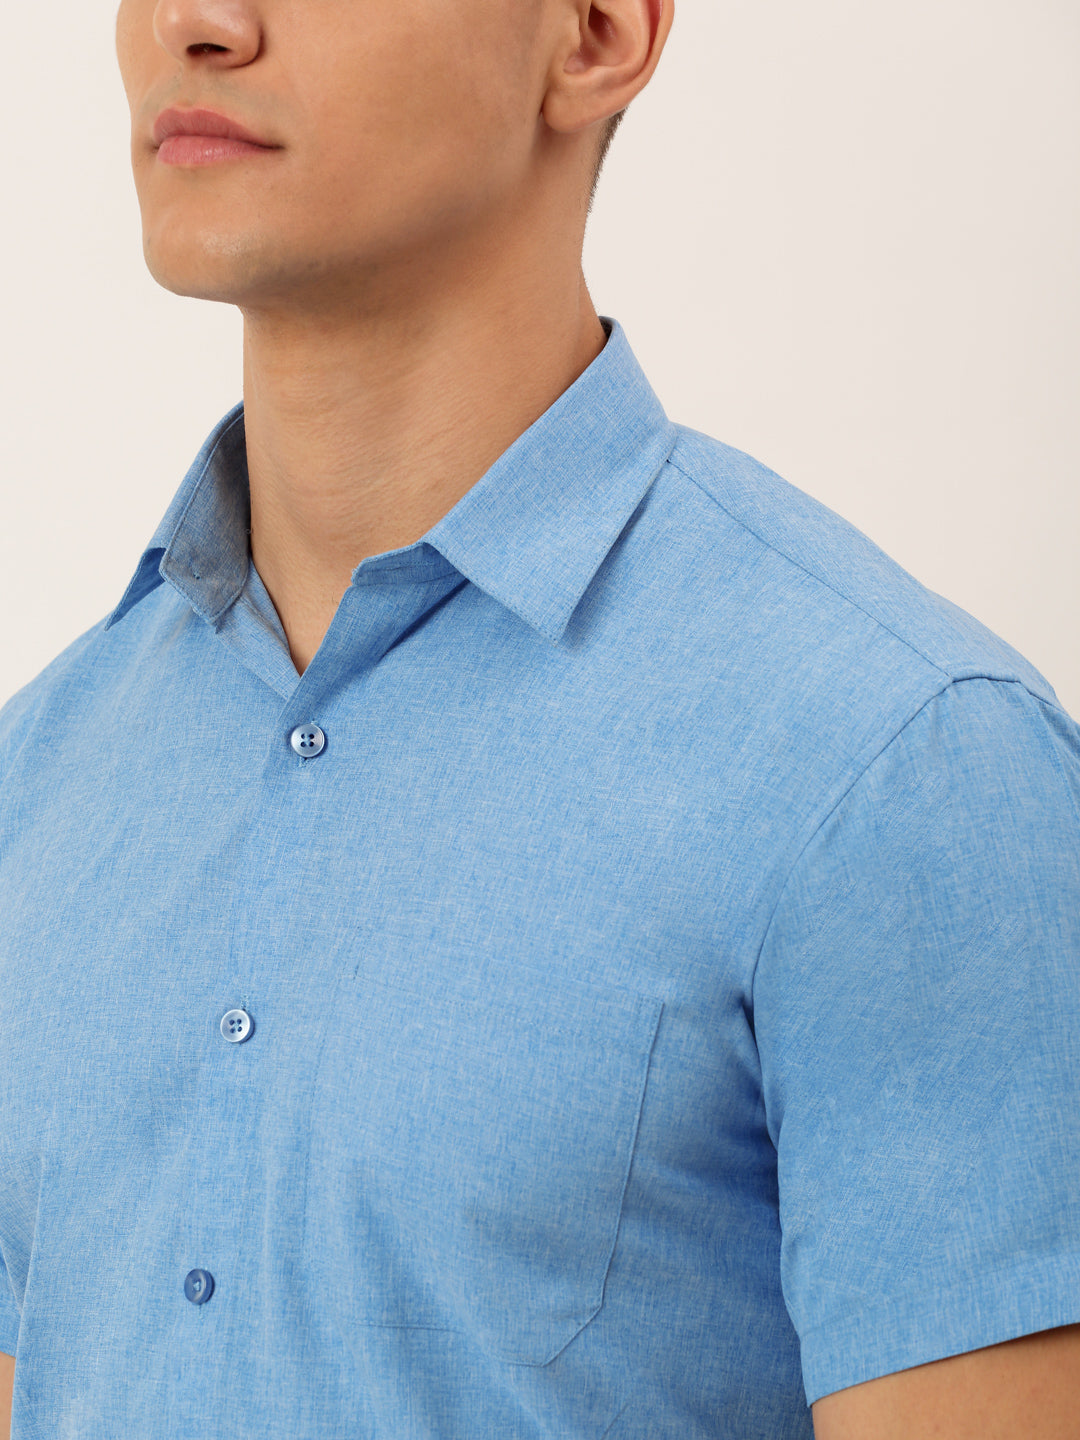 Men's Cotton Solid Half Sleeve Formal Shirts ( SF 811Light-Blue ) - Jainish